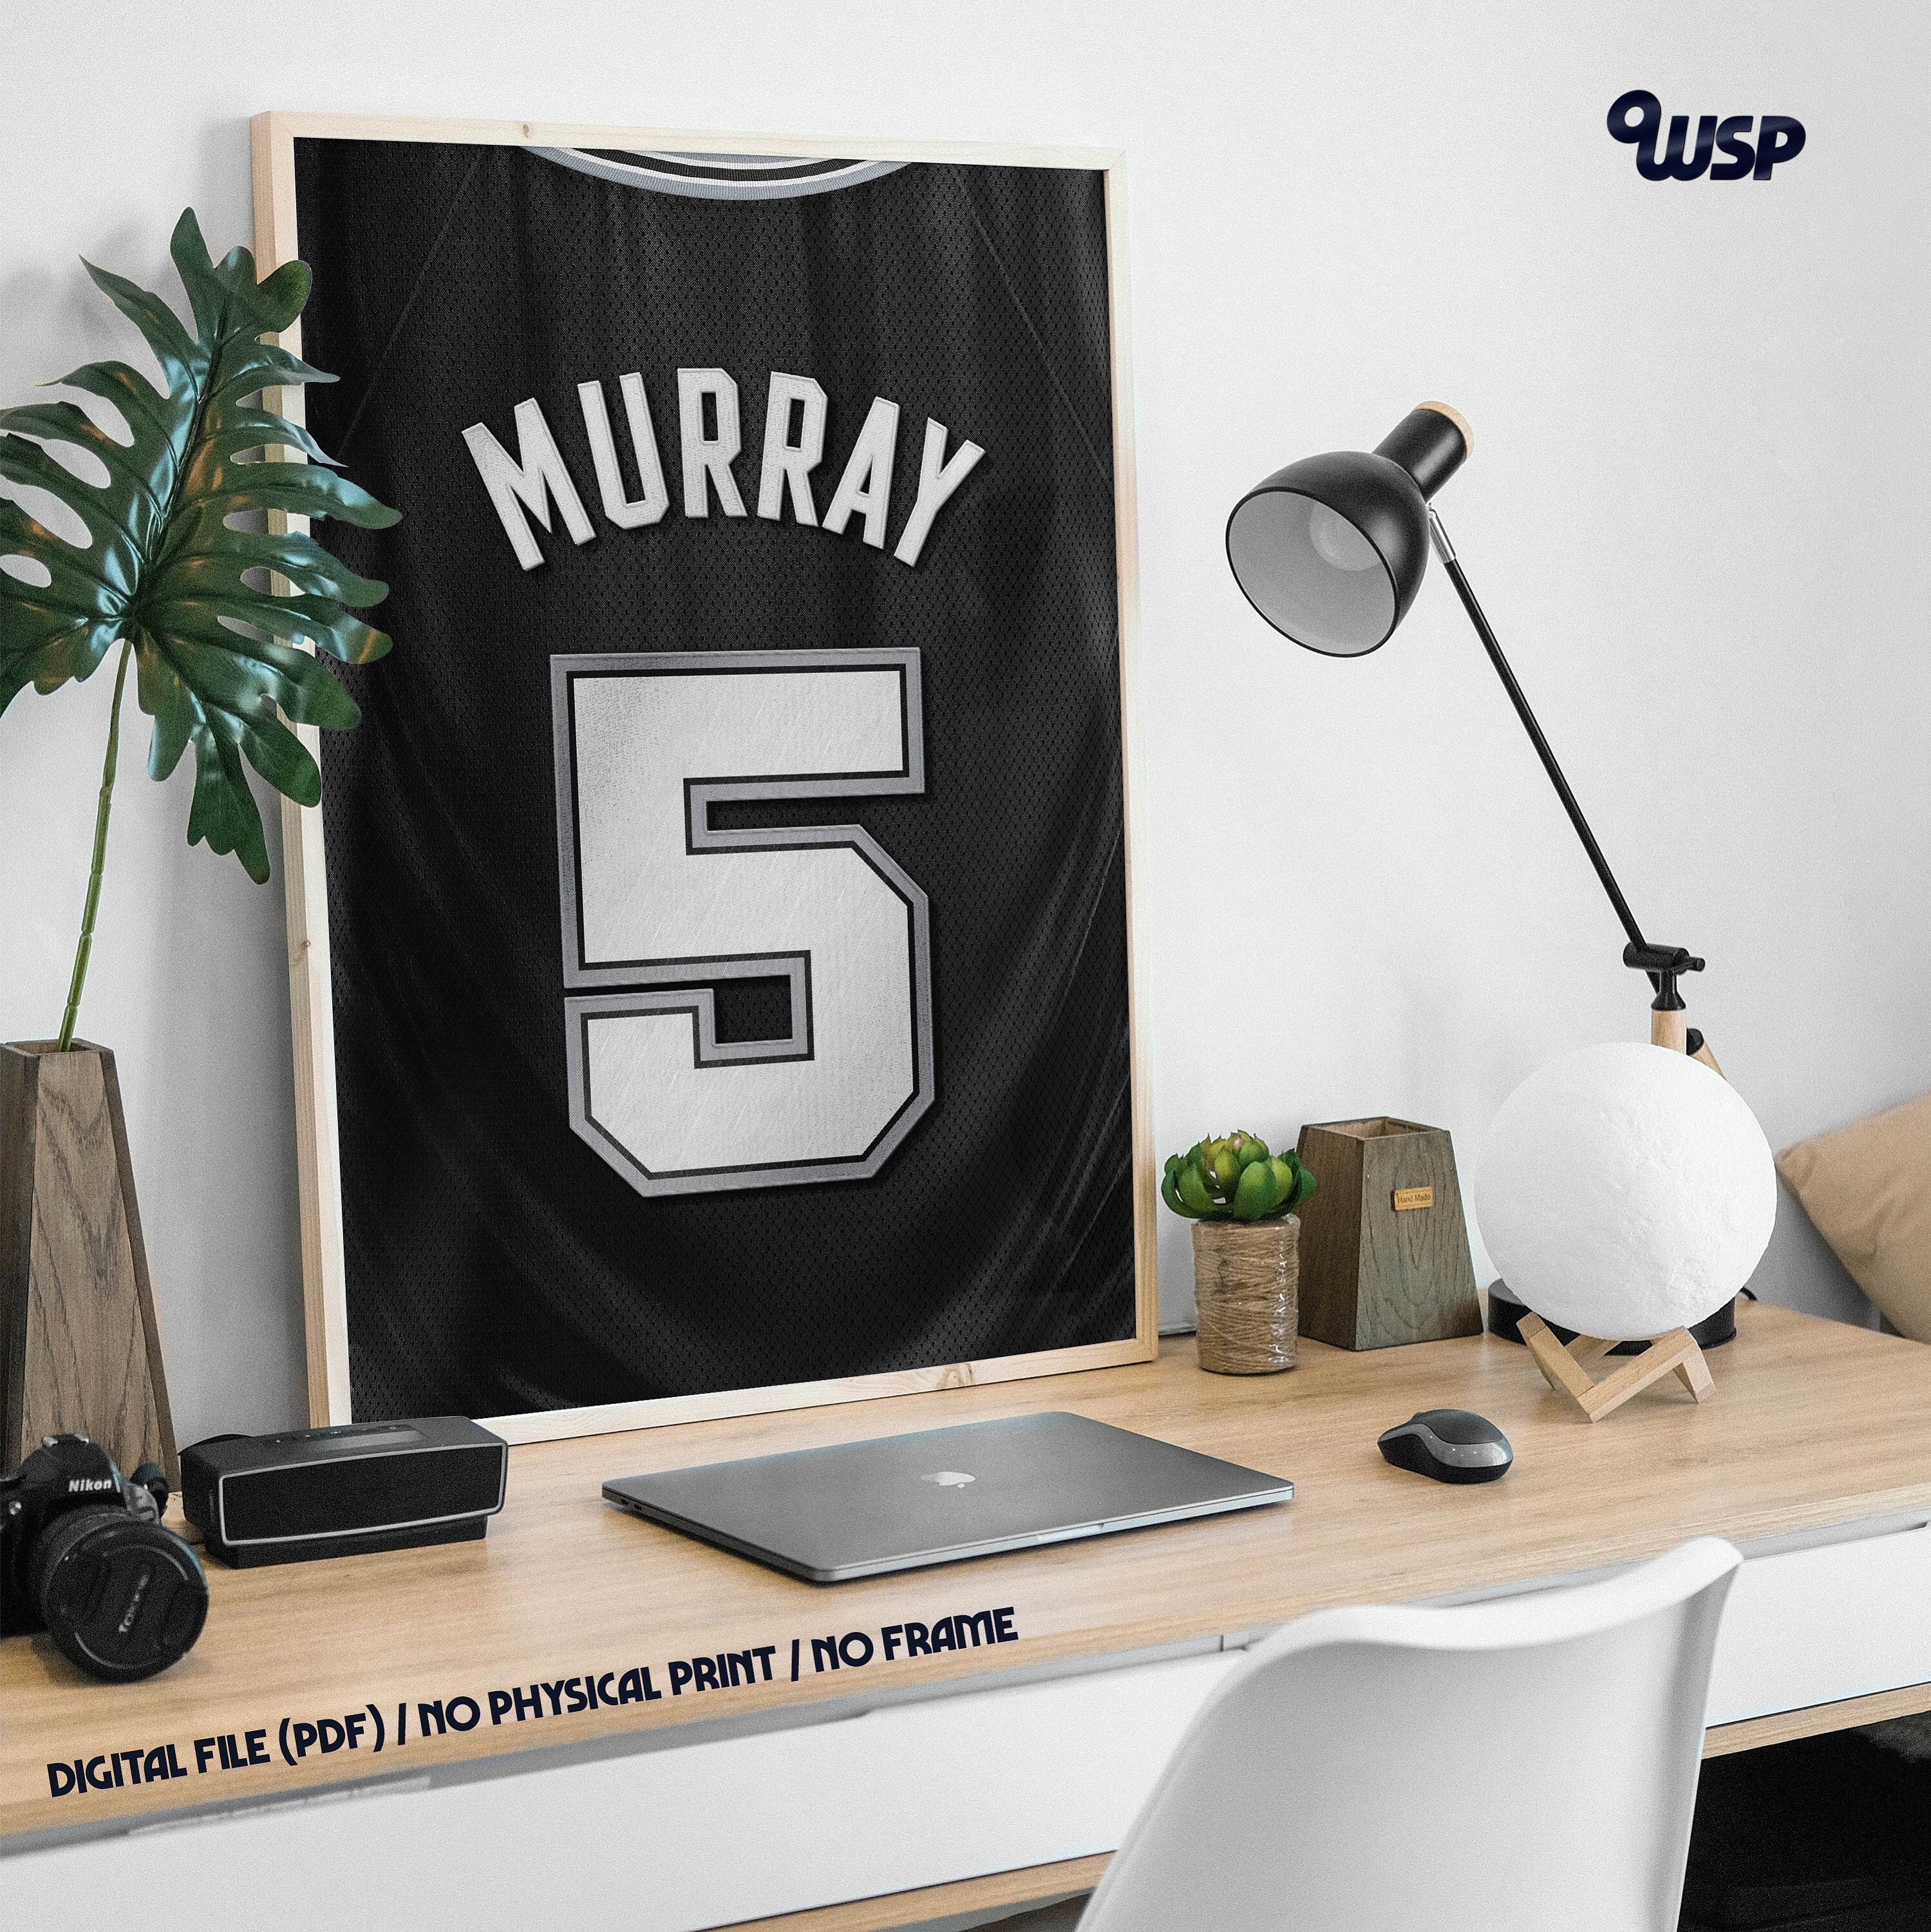 NBA Dejounte Murray Member of The Atlanta Hawks Home Decor Poster Canvas -  REVER LAVIE